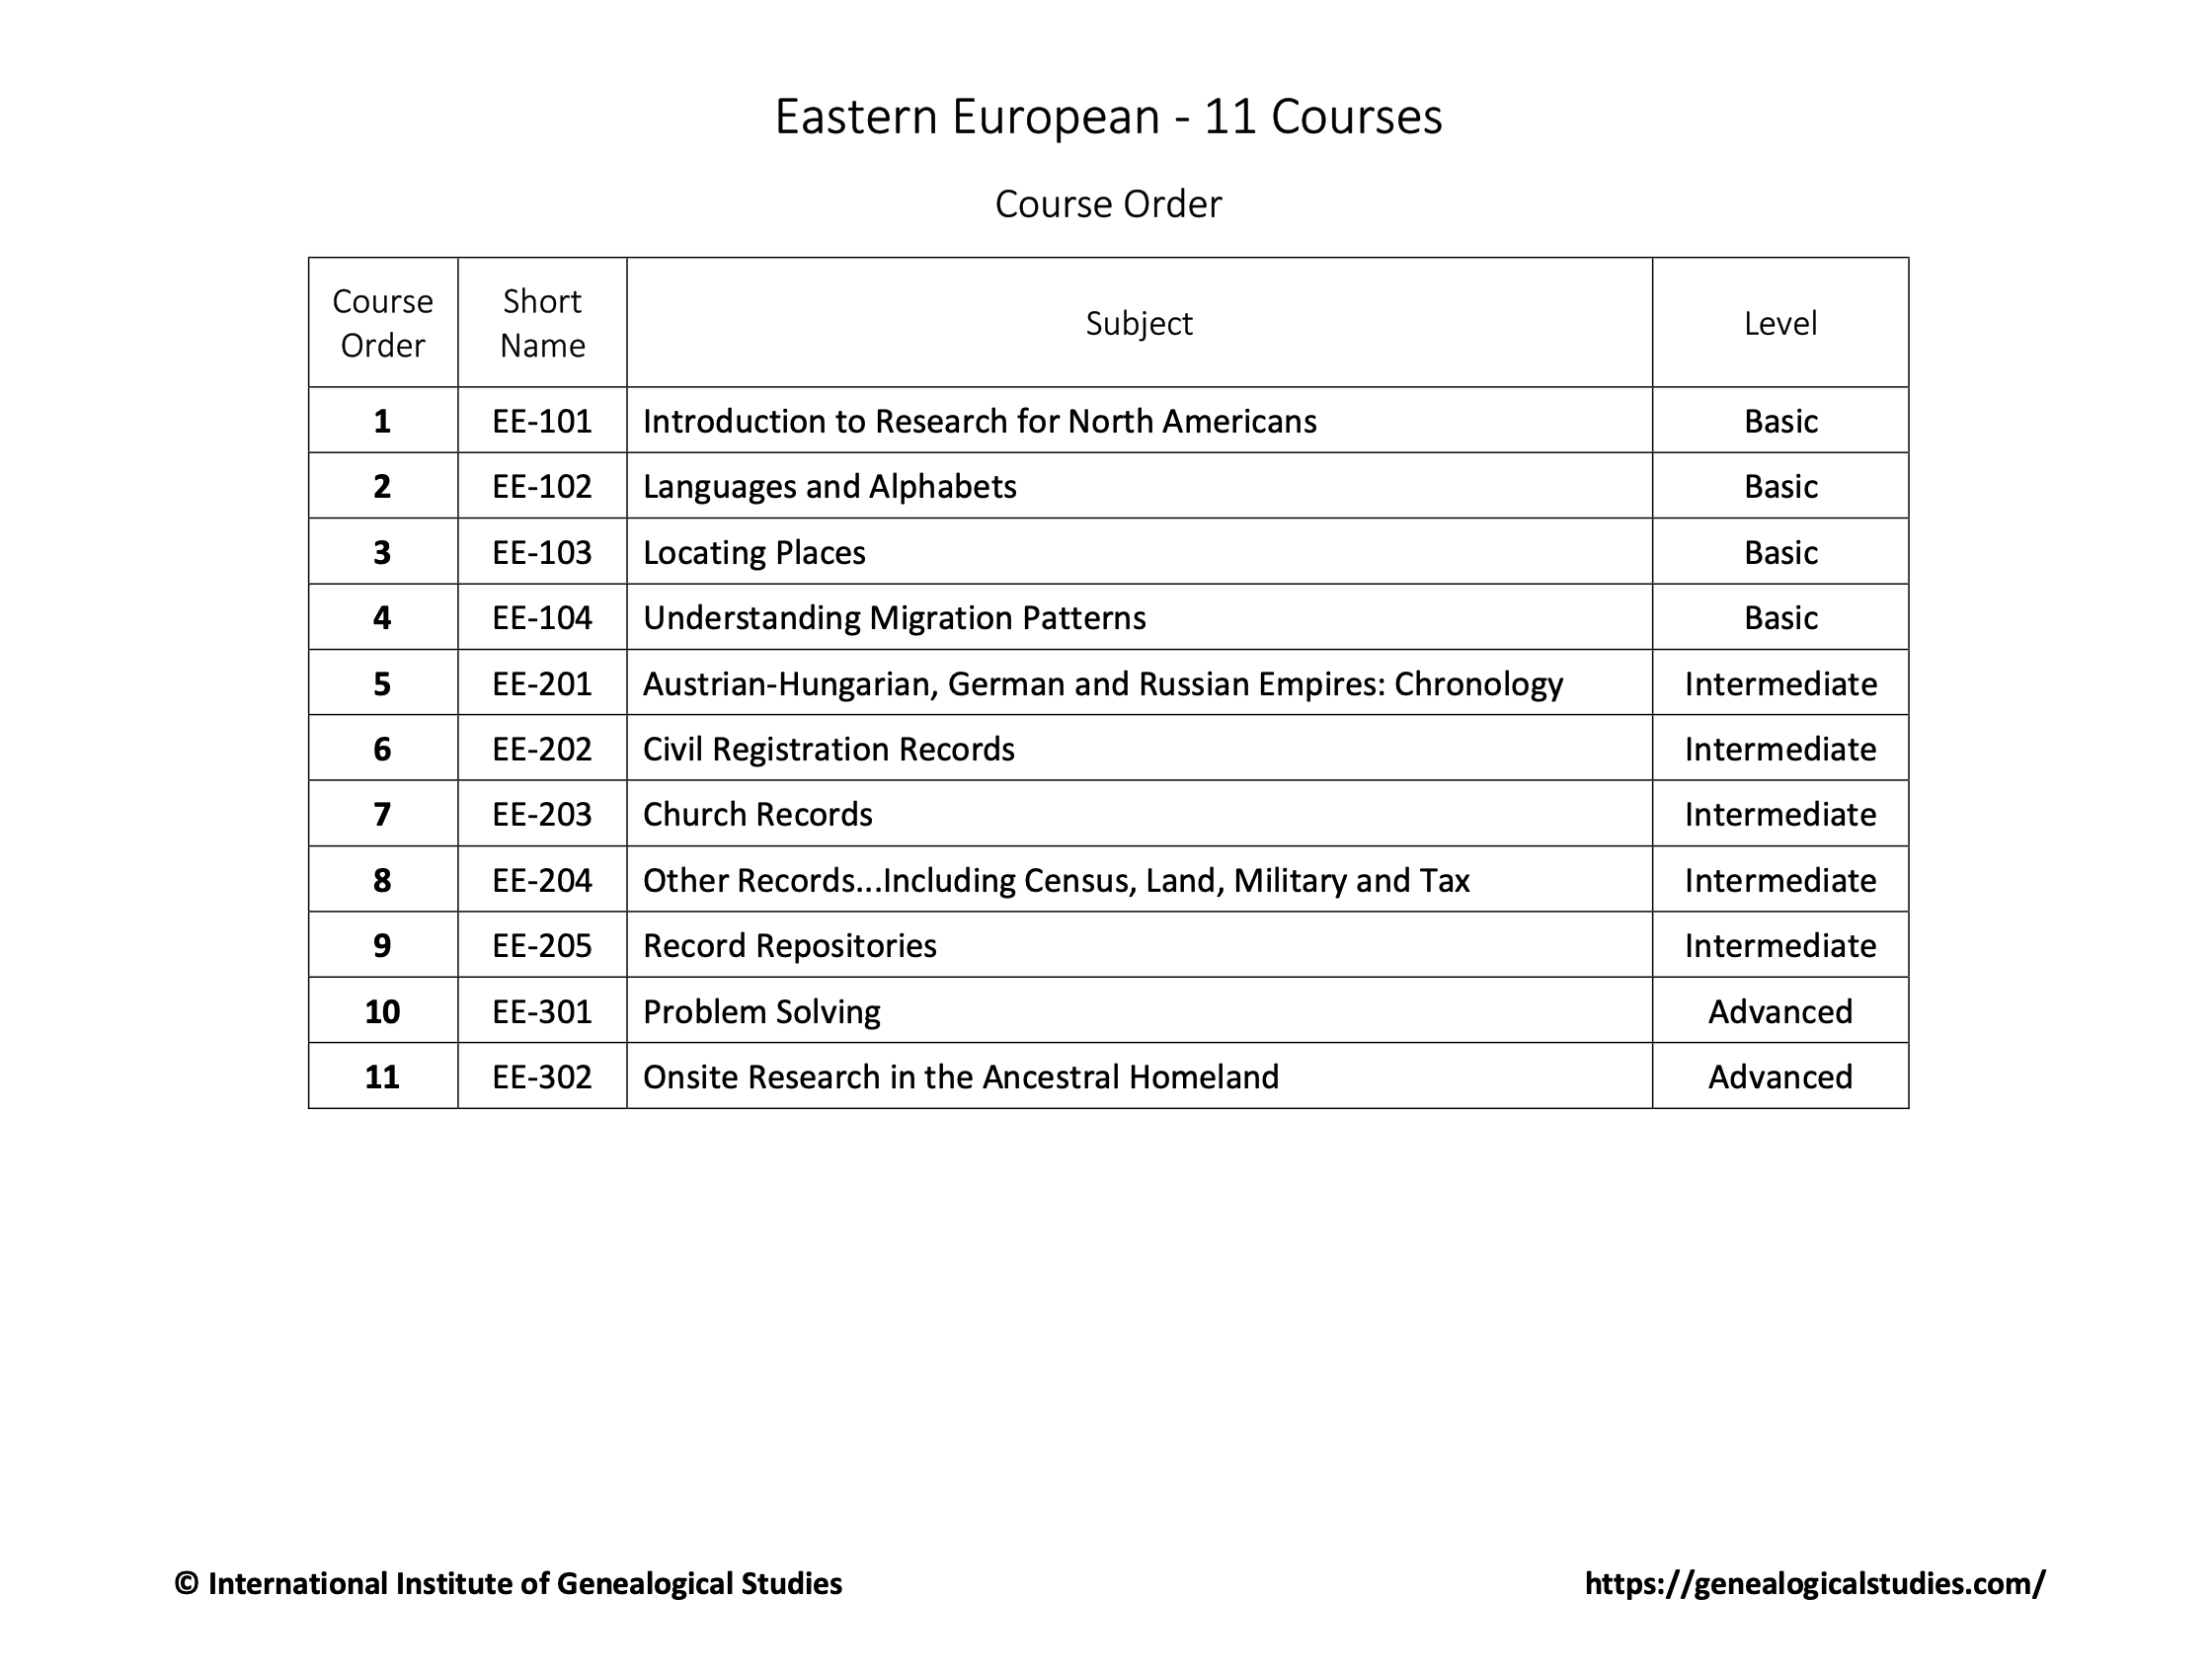 Eastern European Certificate course order